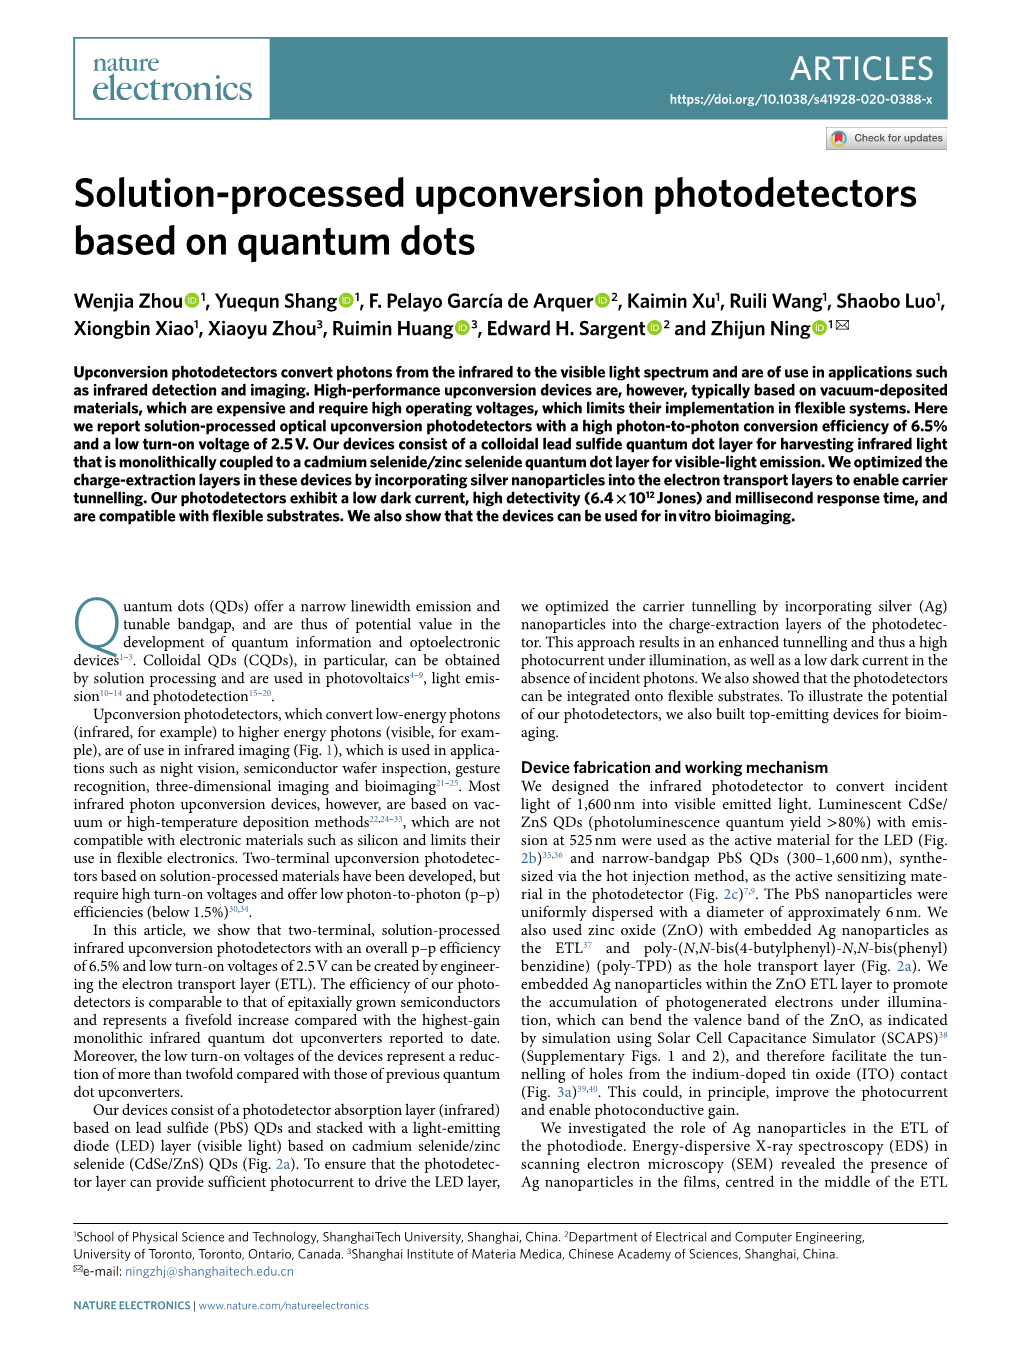 Solution-Processed Upconversion Photodetectors Based on Quantum Dots